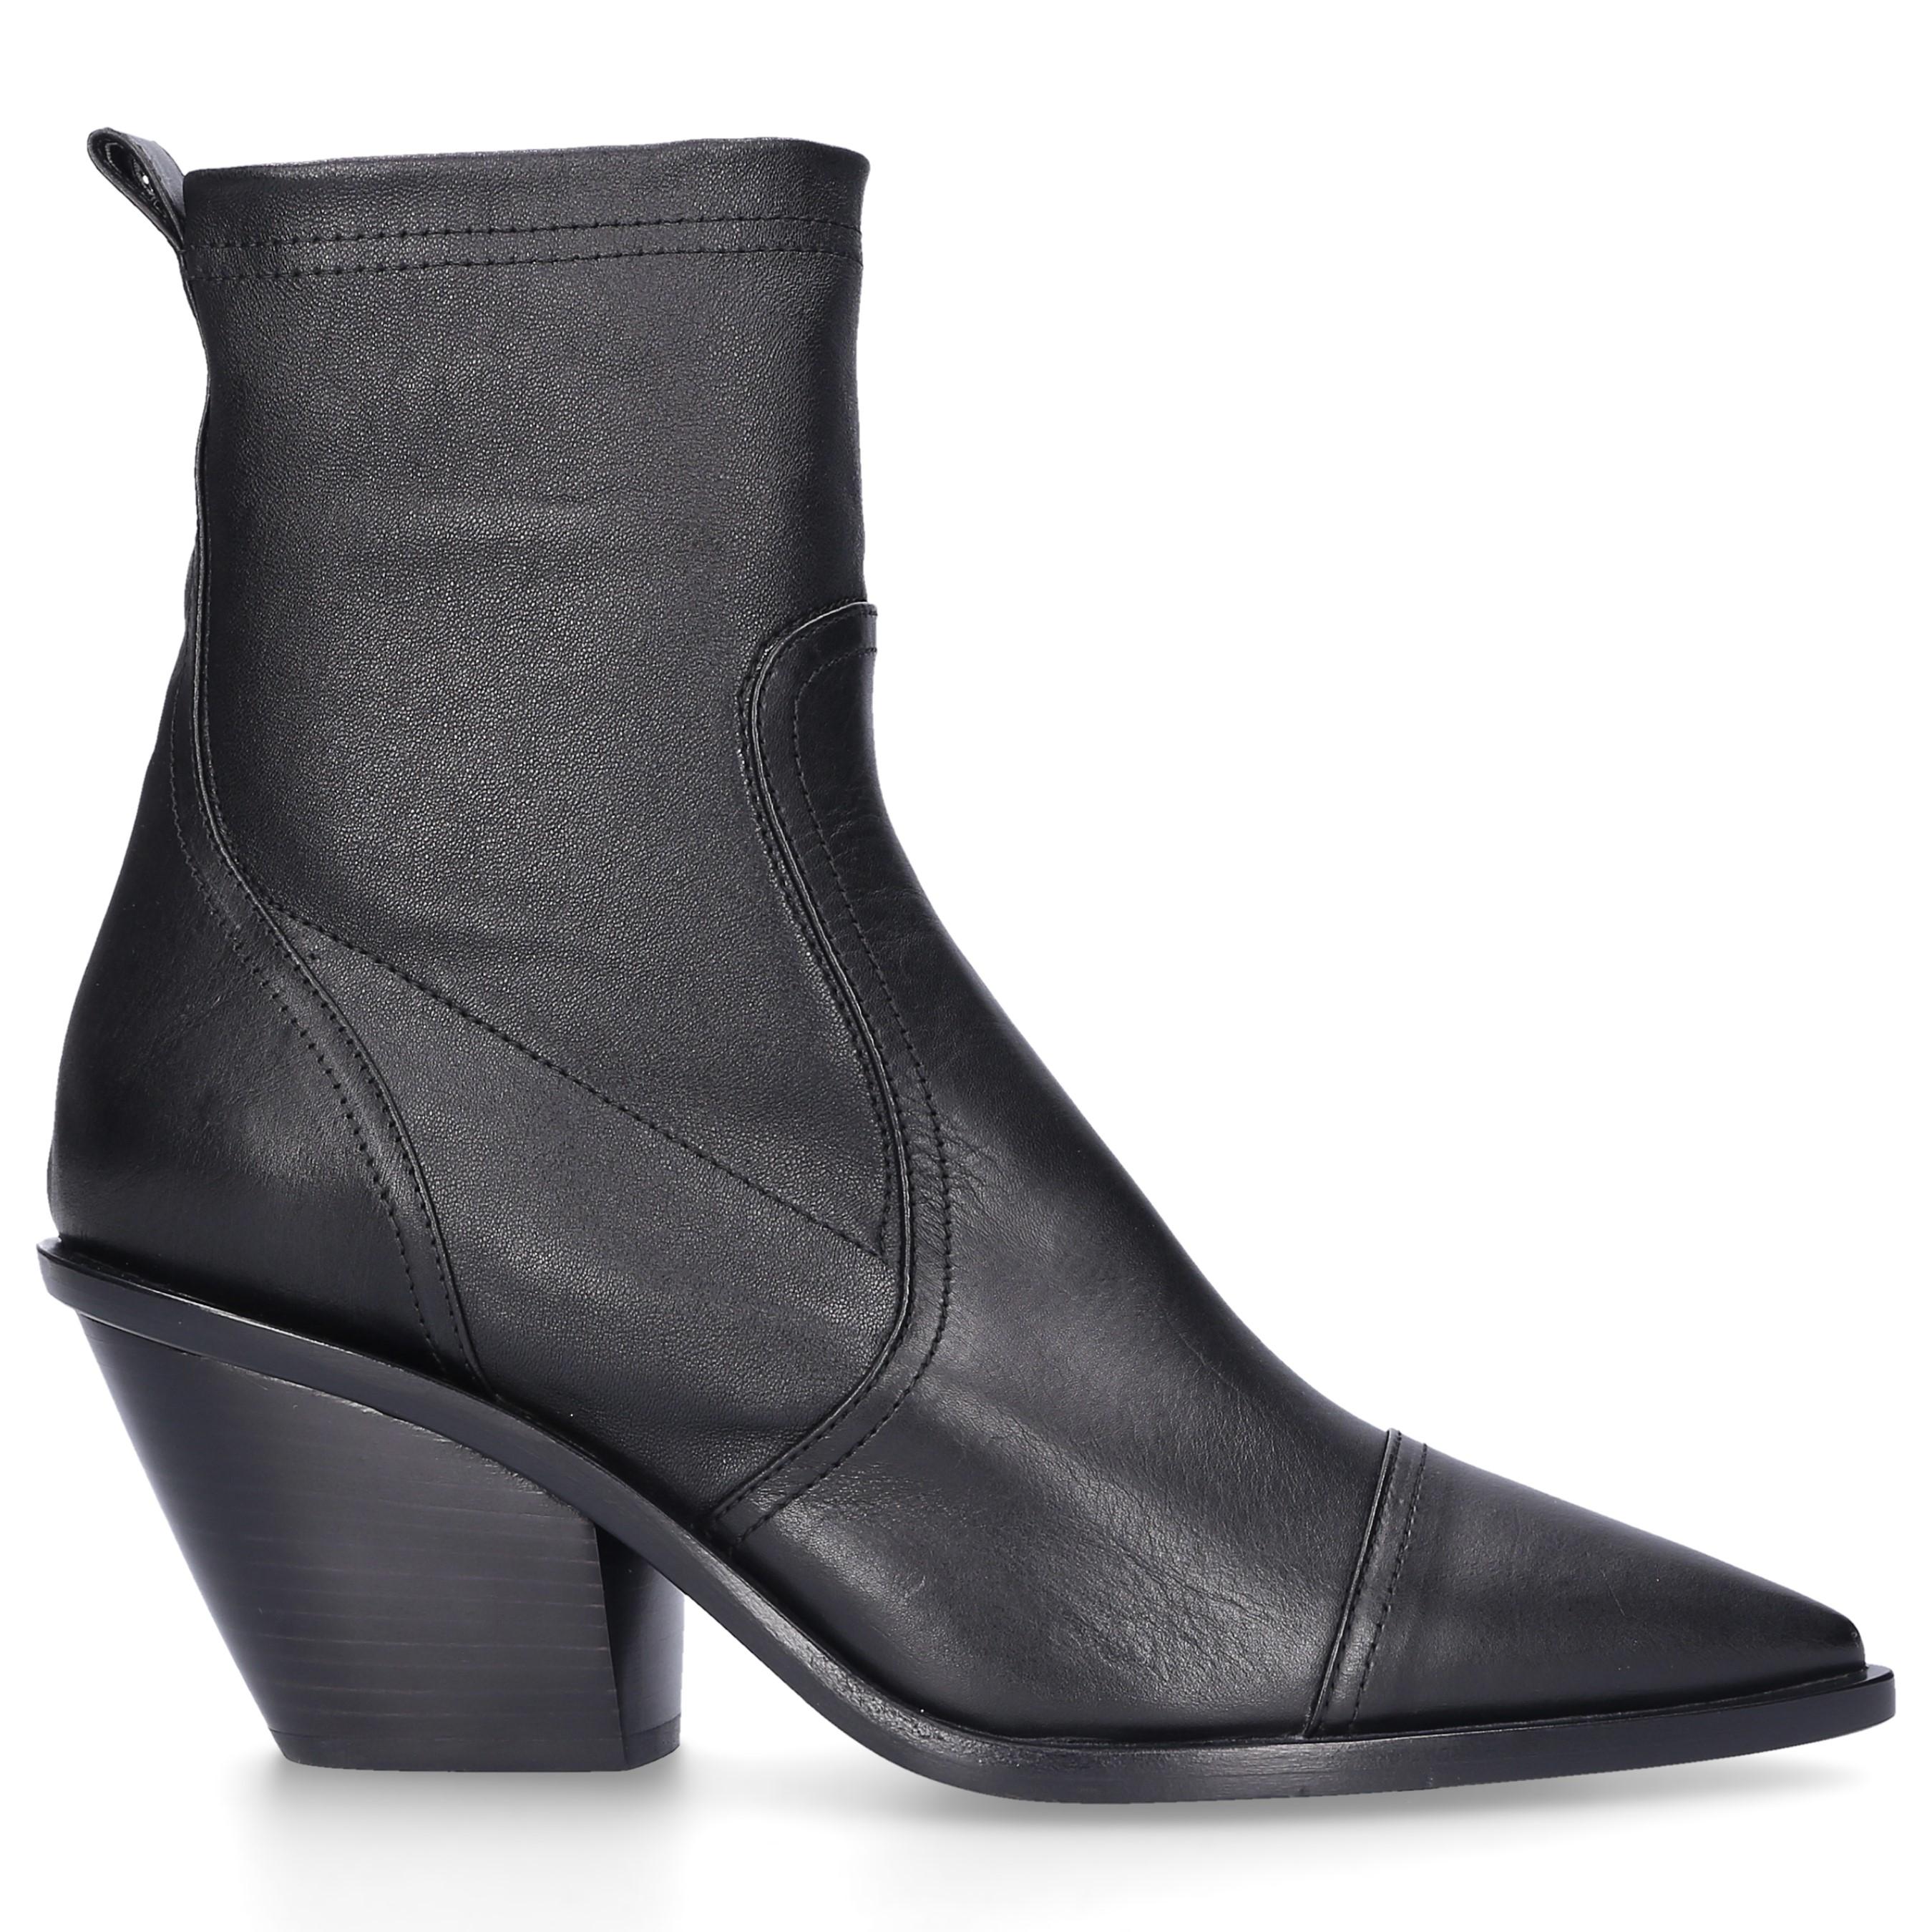 Agl Attilio Giusti Leombruni Leather Ankle Boots Black D239530 - Lyst